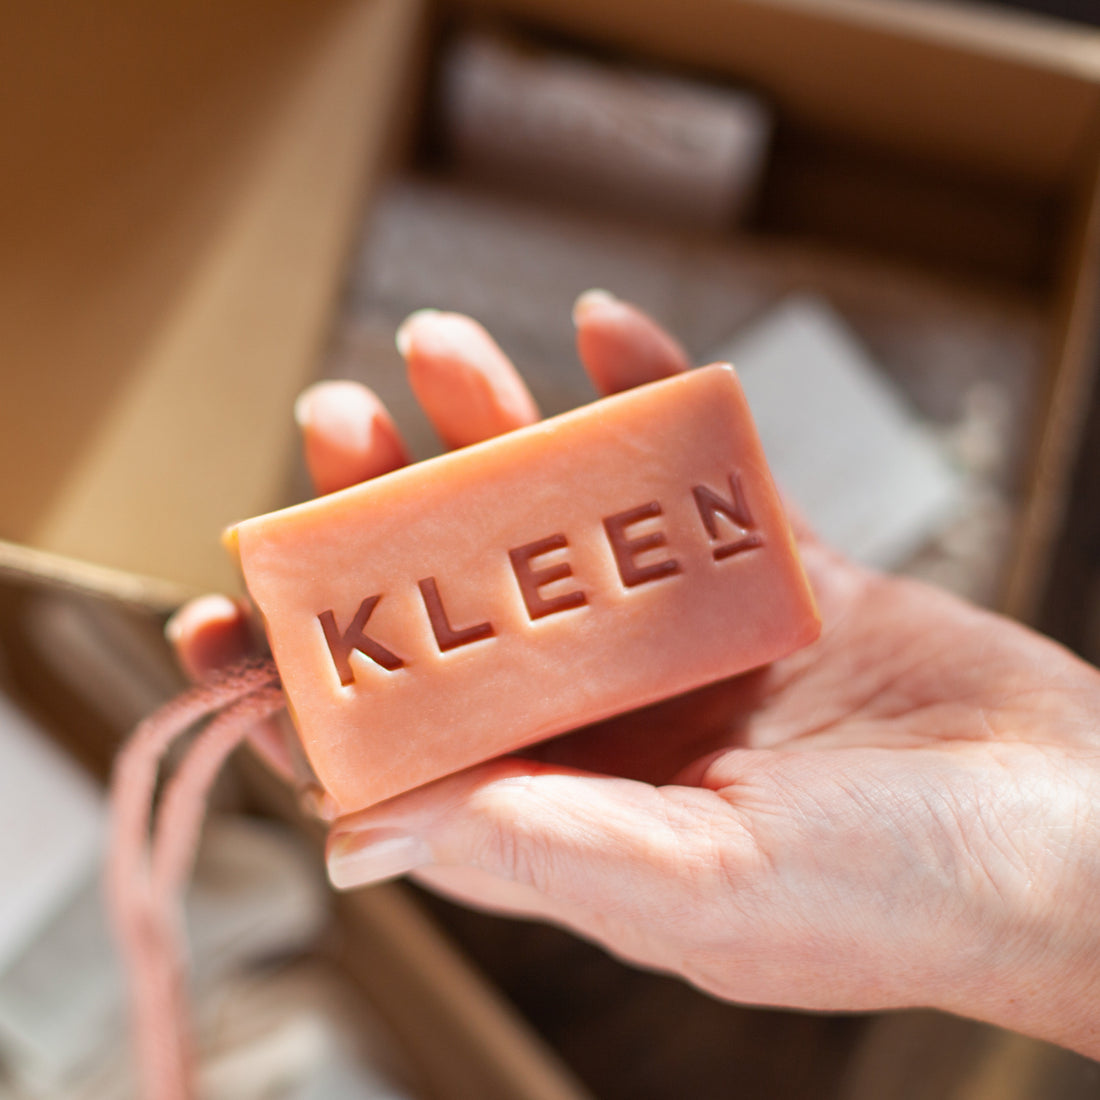 Kleen Soap | Good Vibrations